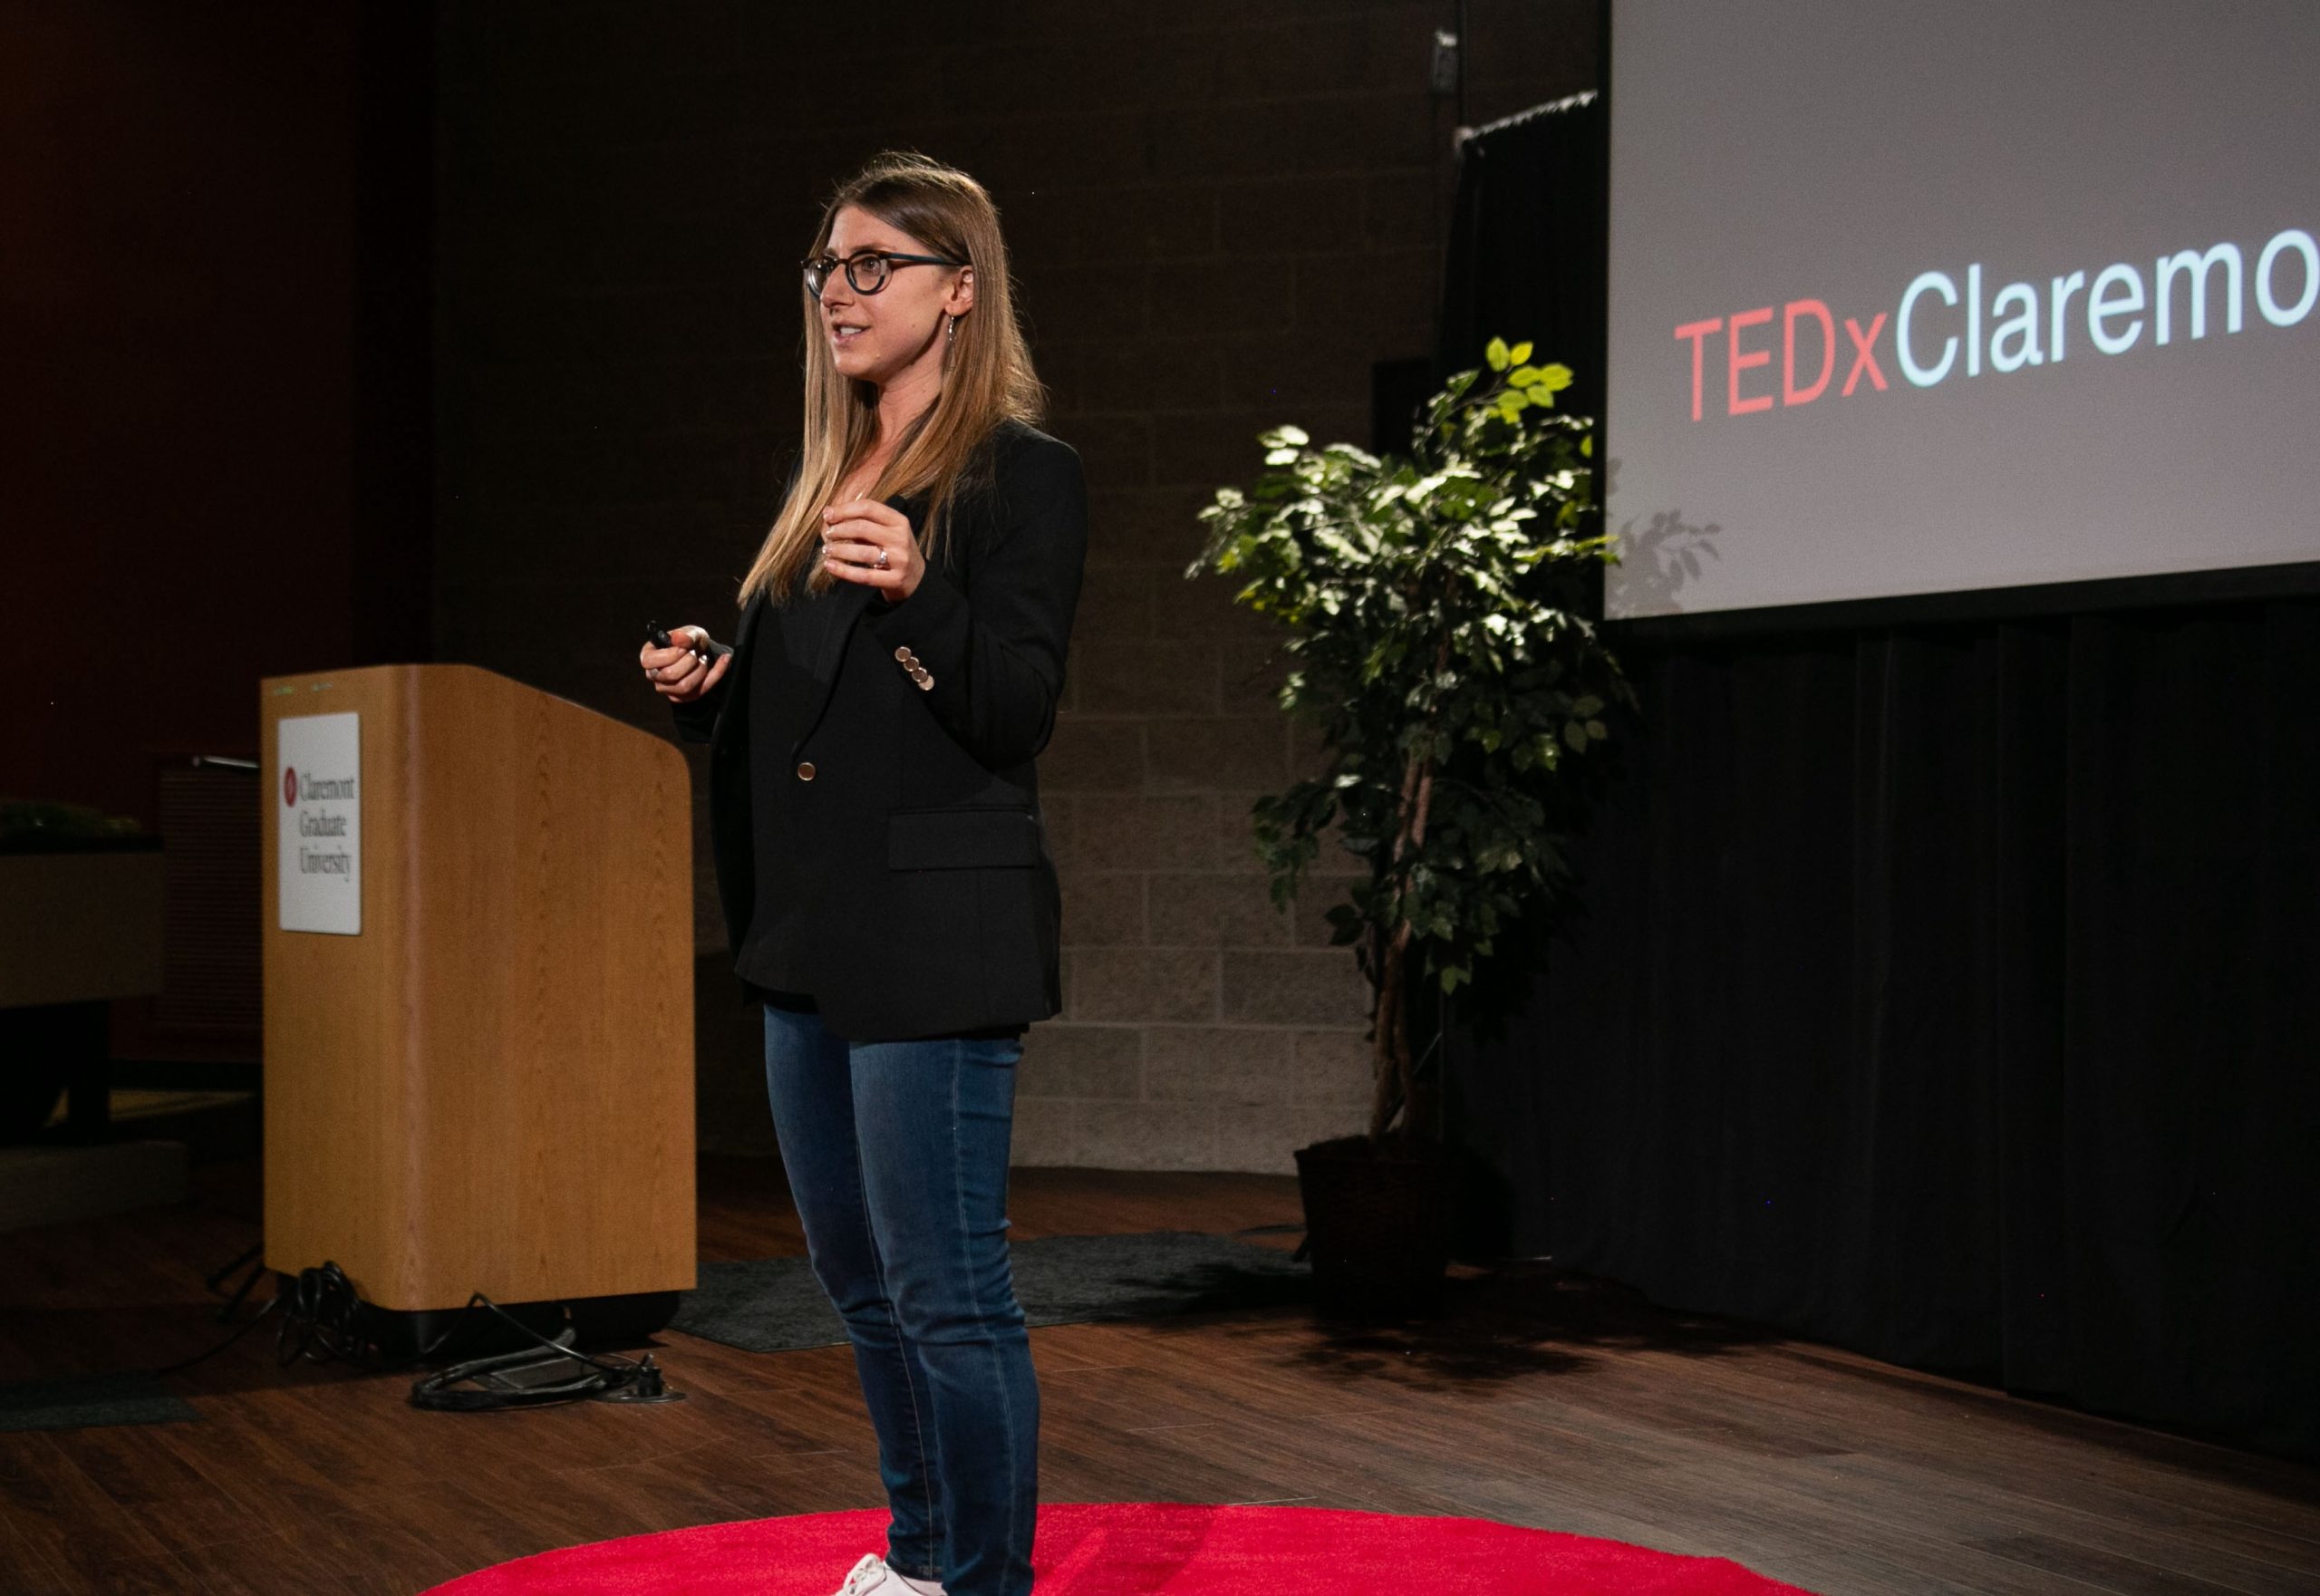 speaking at TEDx